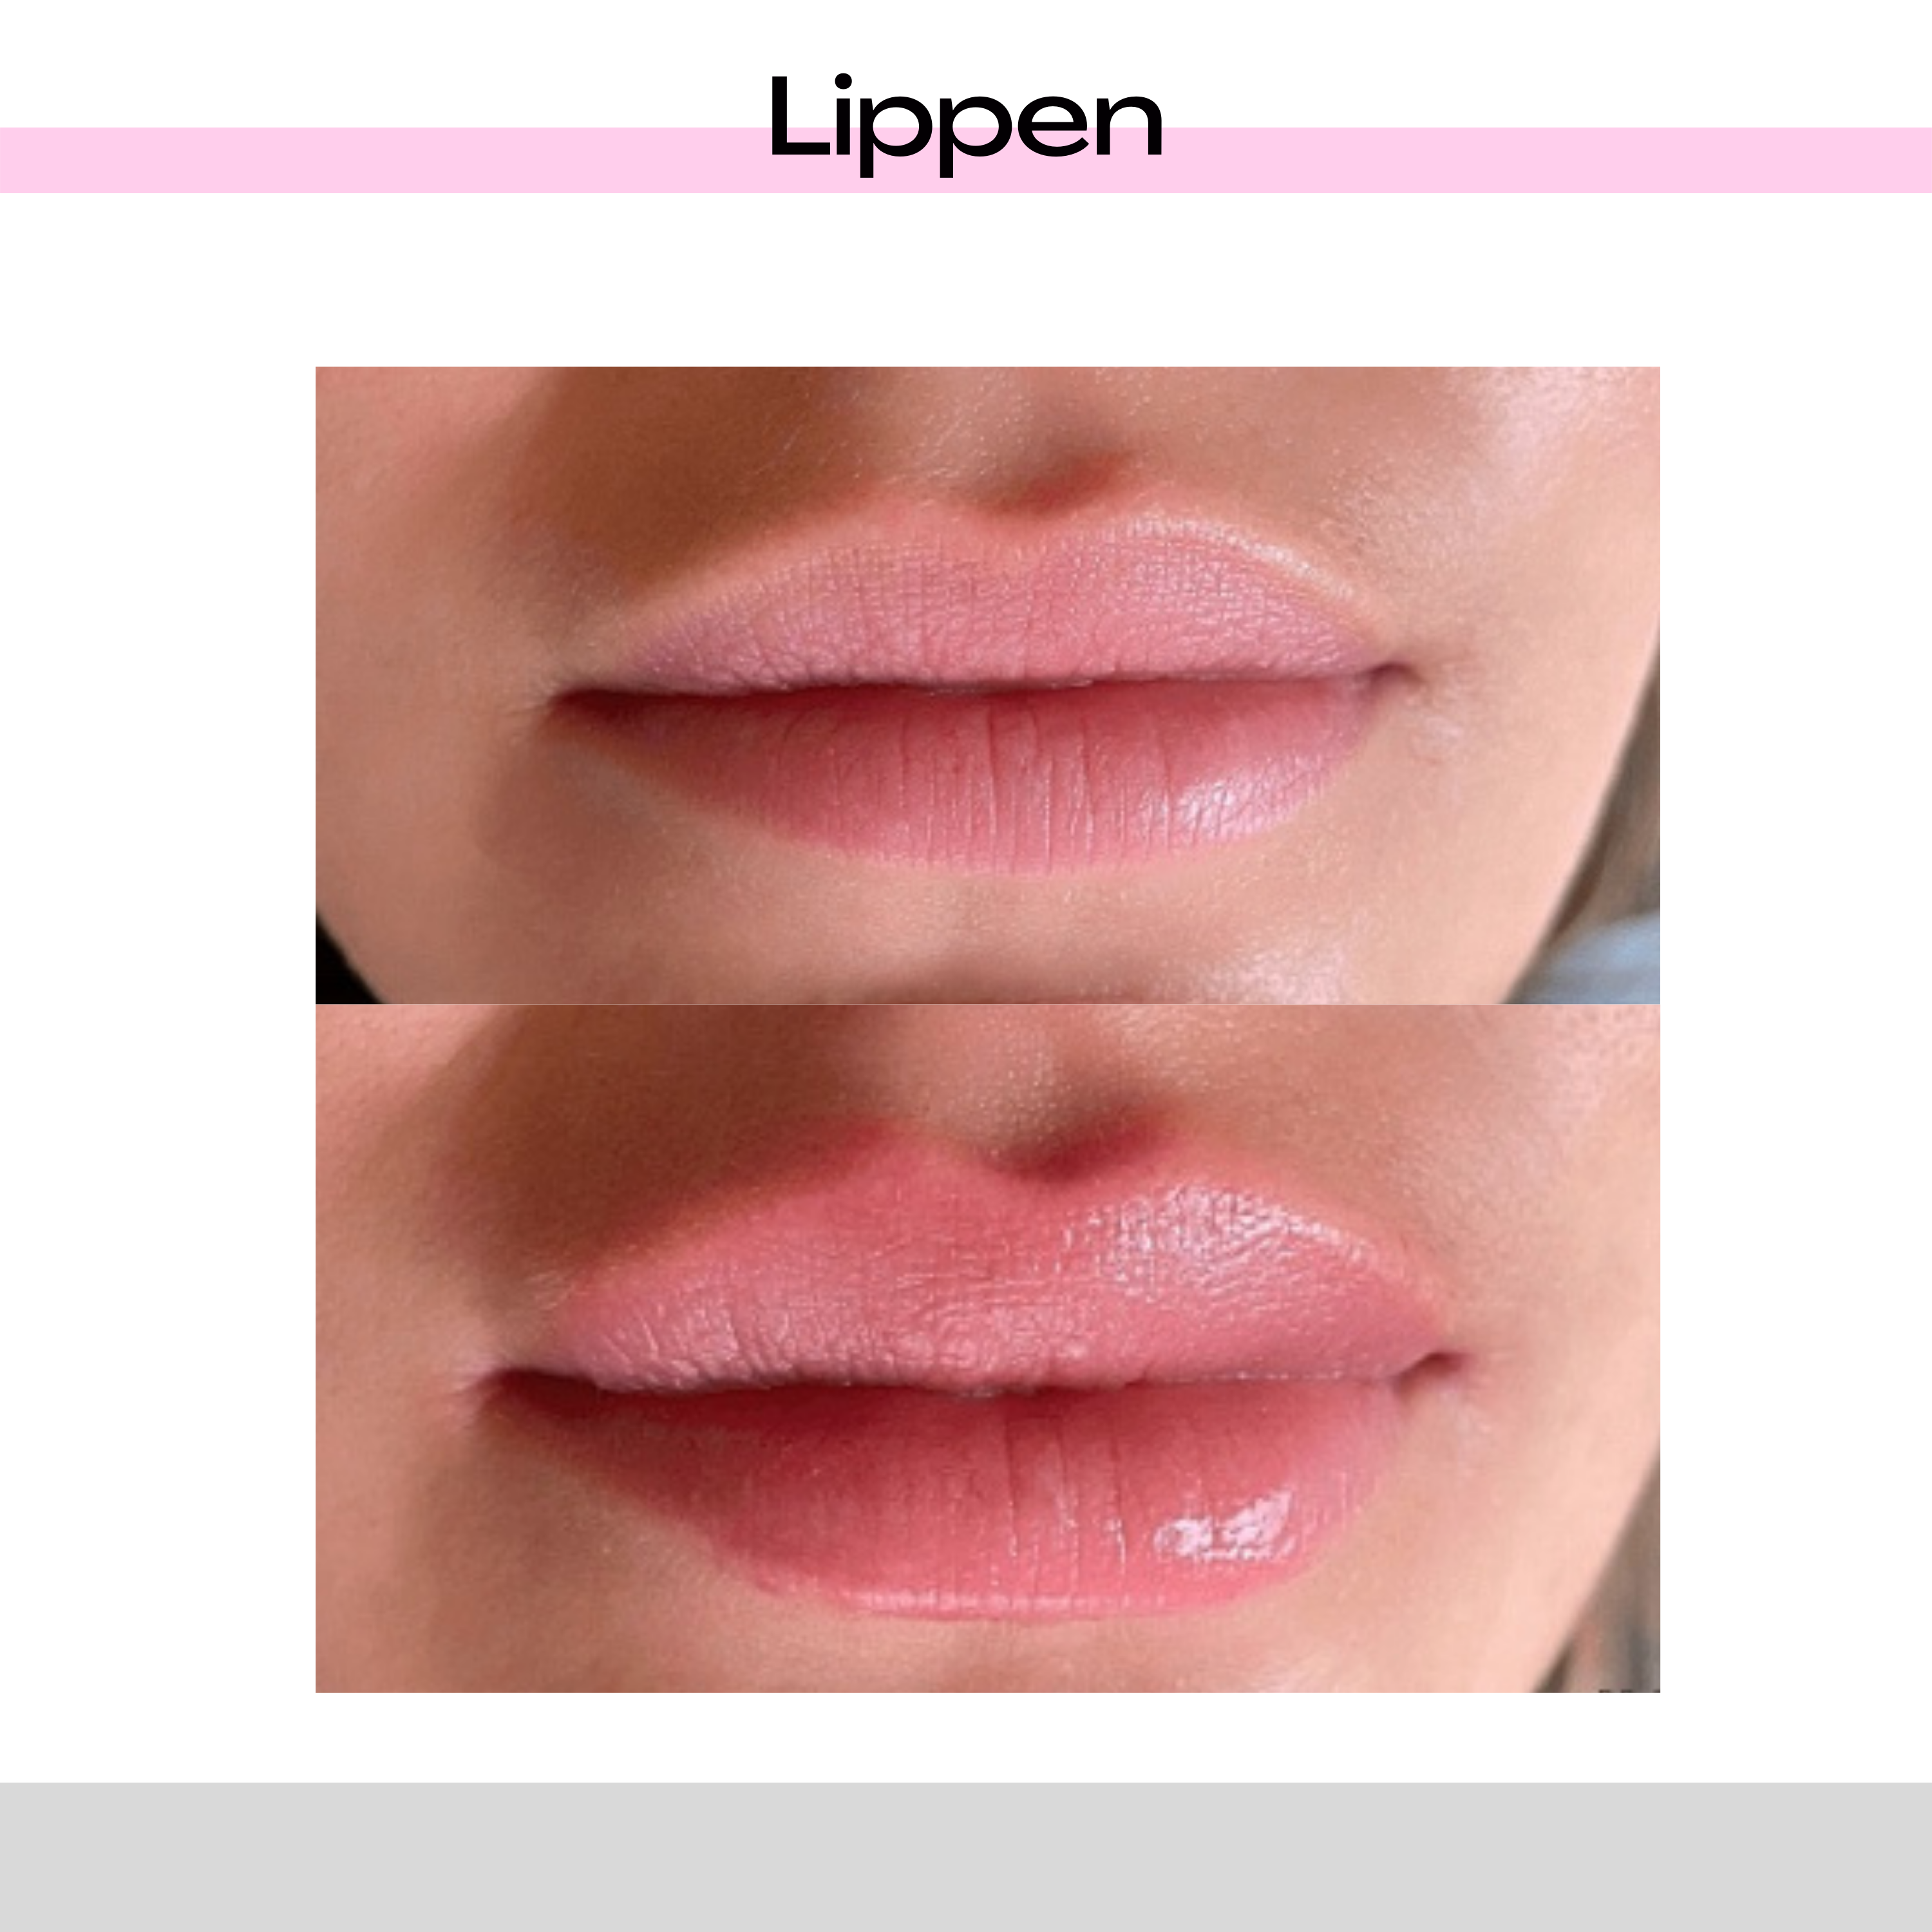 Lippen aufspritzen